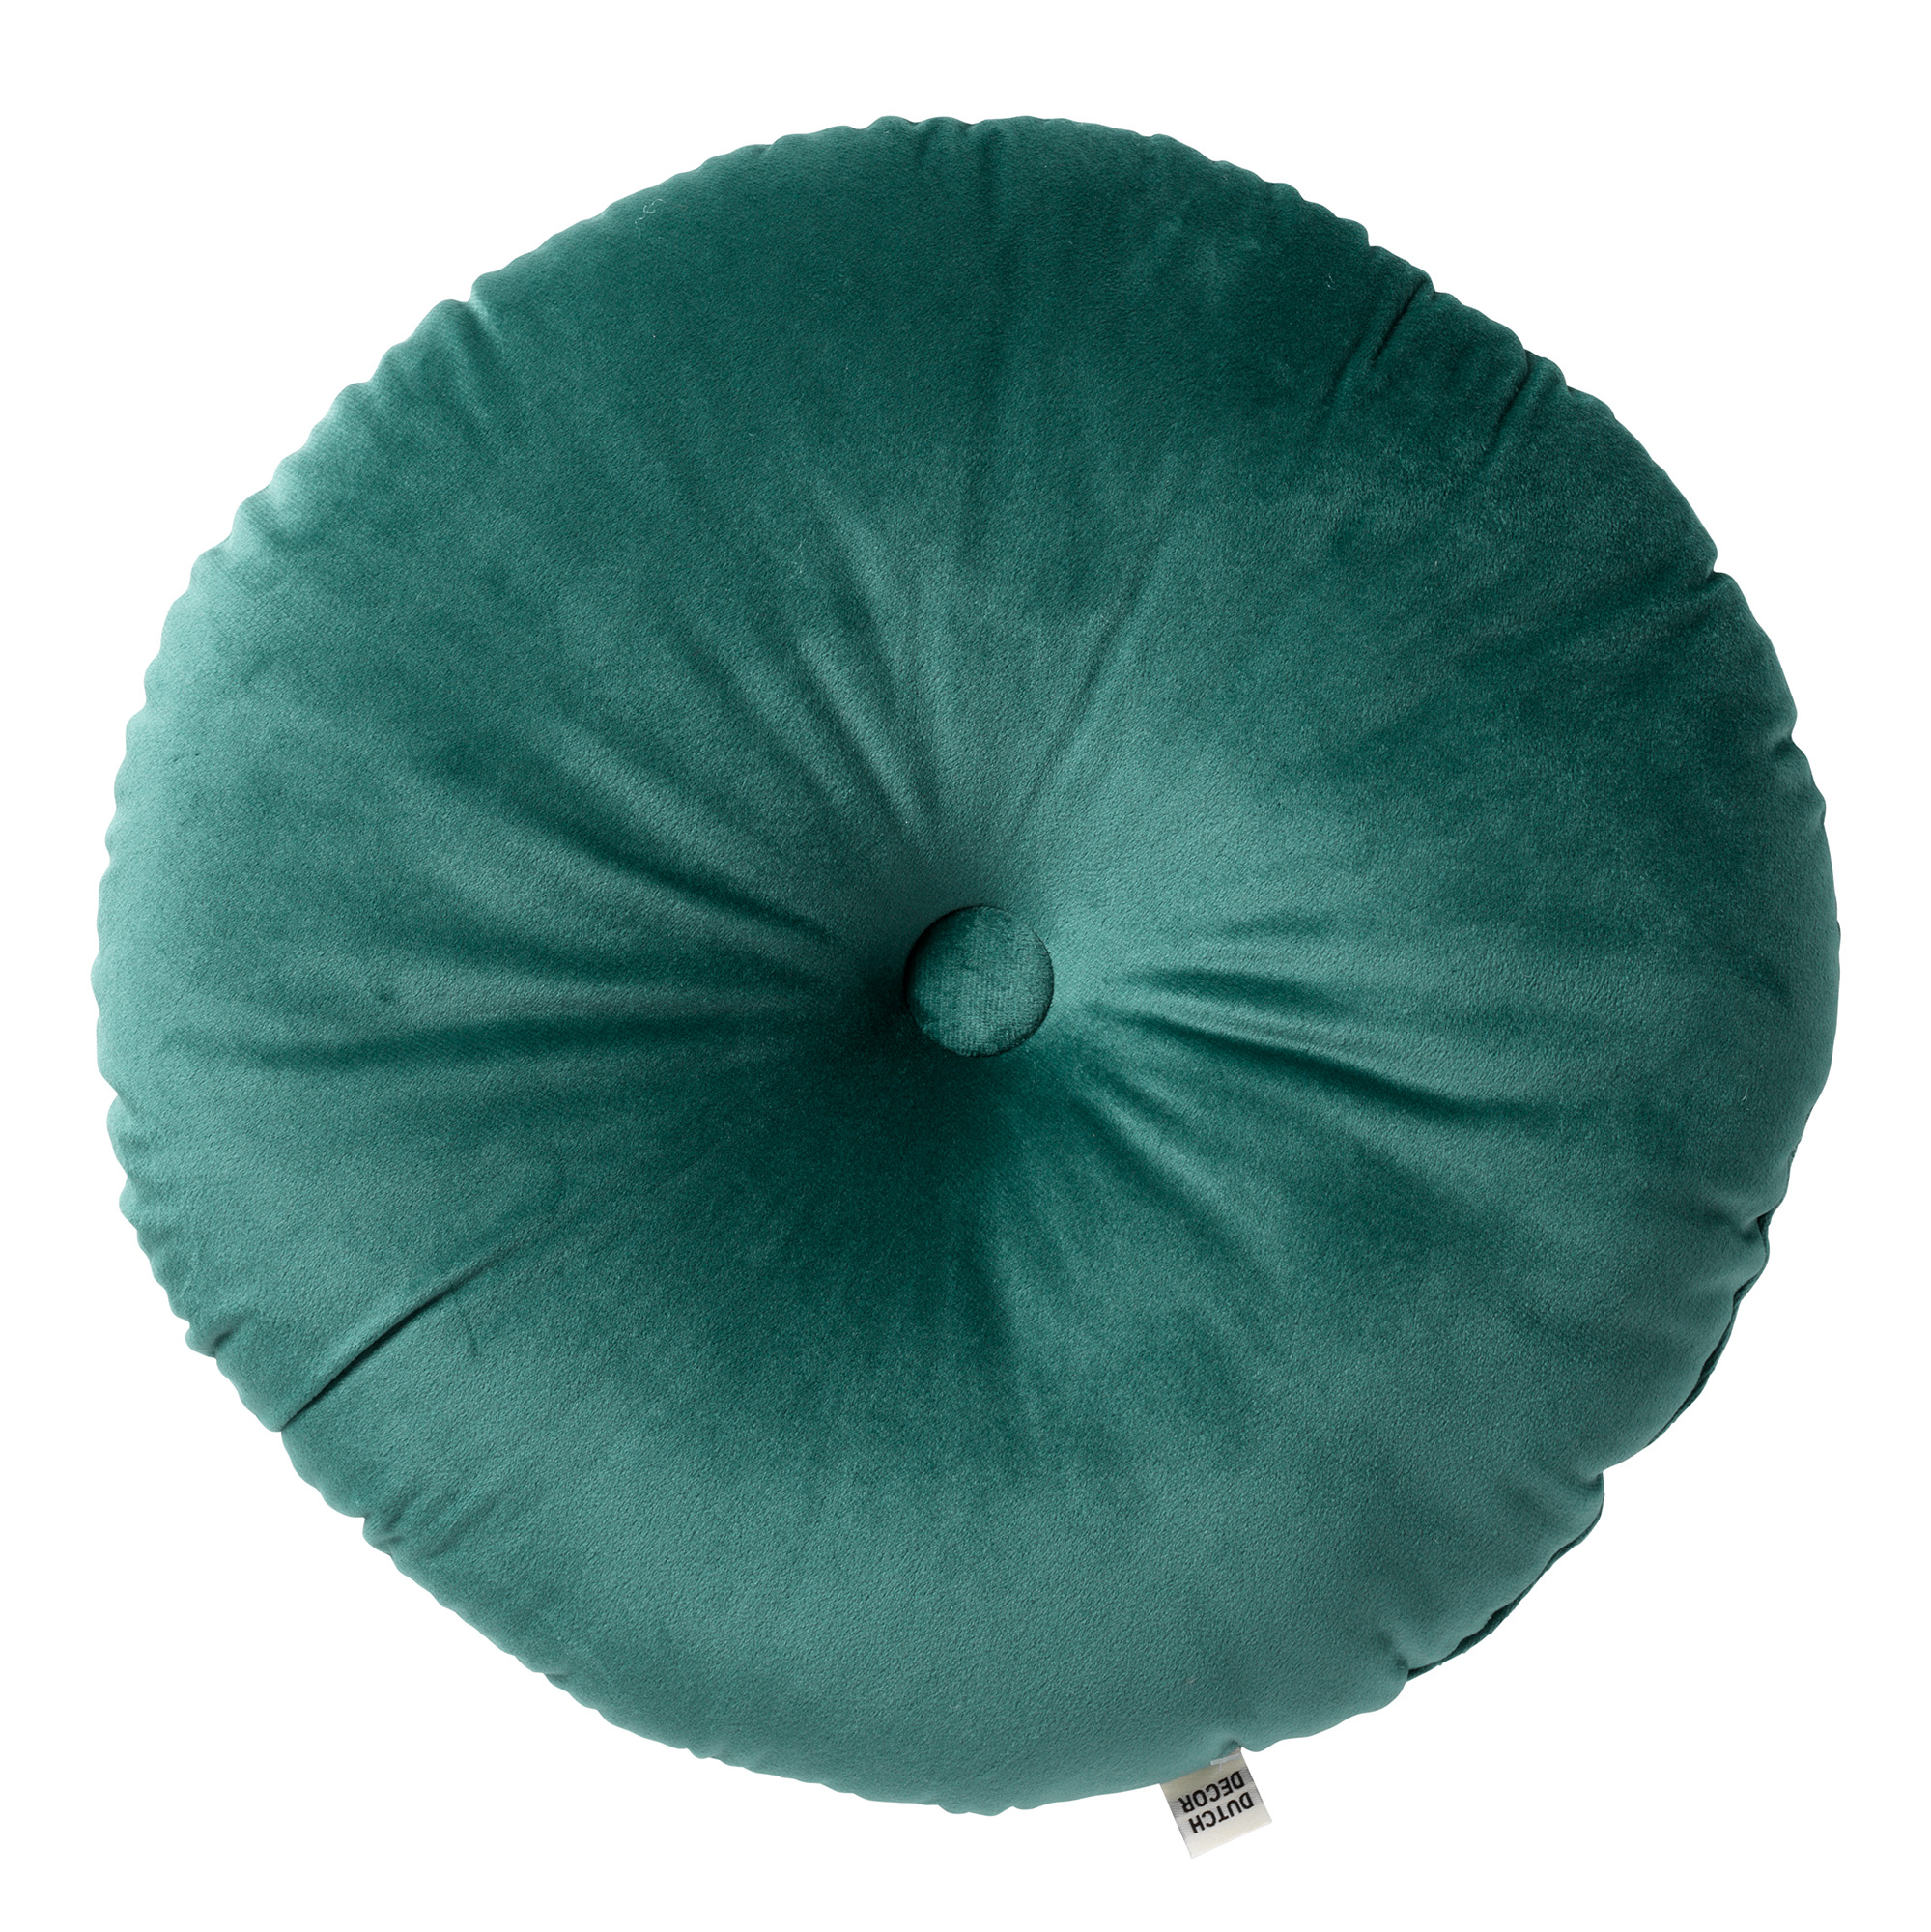 OLLY - Cushion 40 cm Sagebrush Green - green